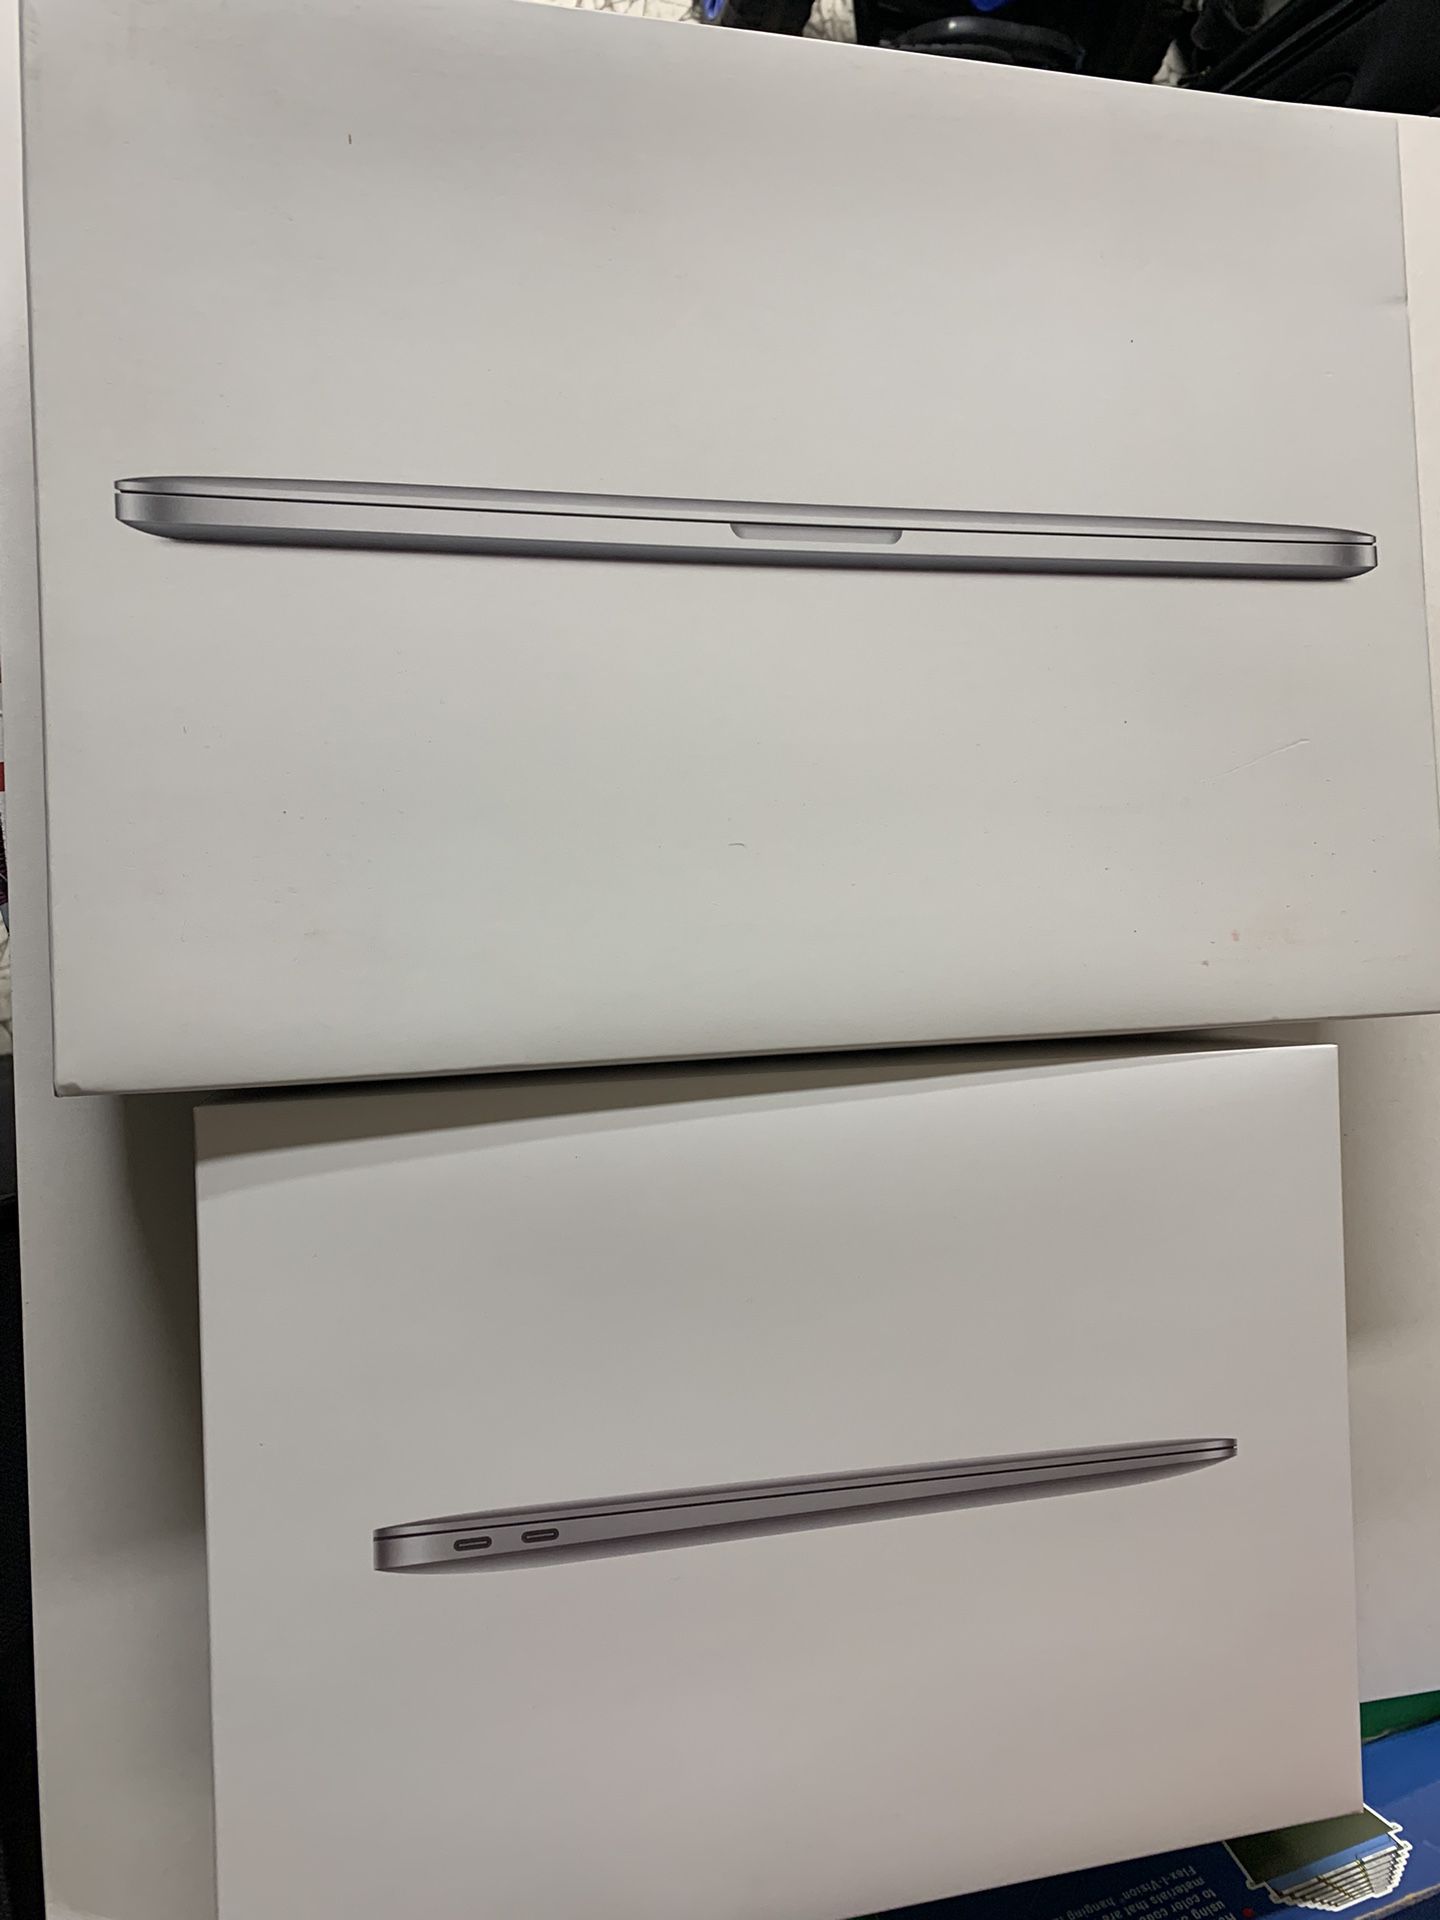 MacBook Boxes - Laptop Computer 